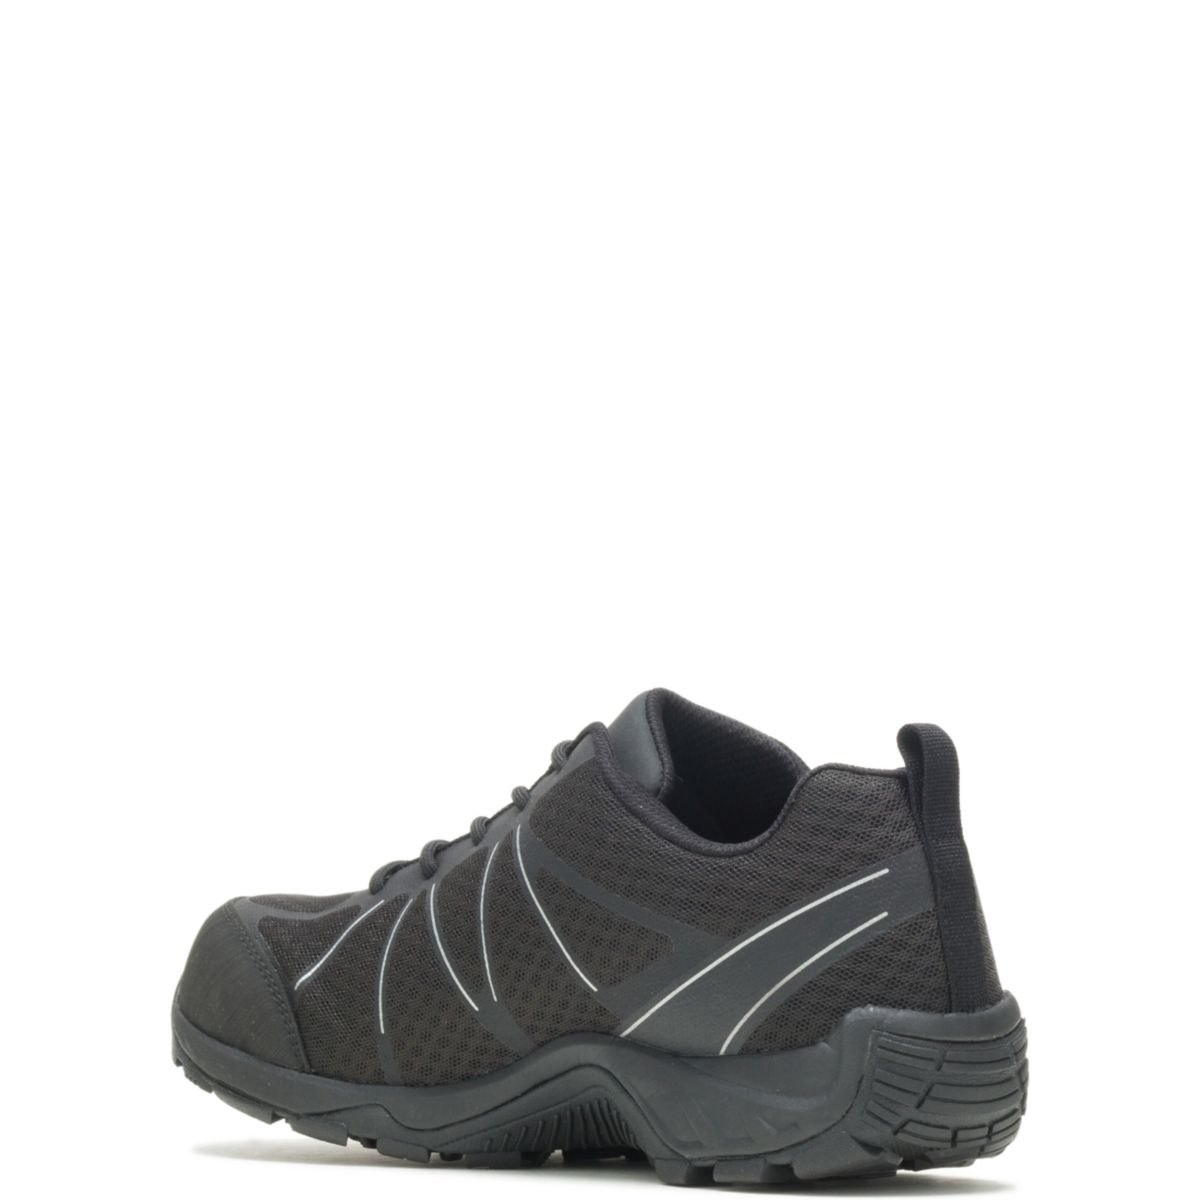 WOLVERINE Men's Amherst II CarbonMAXÂ® Composite Toe Work Shoe Black - W201147 BLACK - BLACK, 12 X-Wide